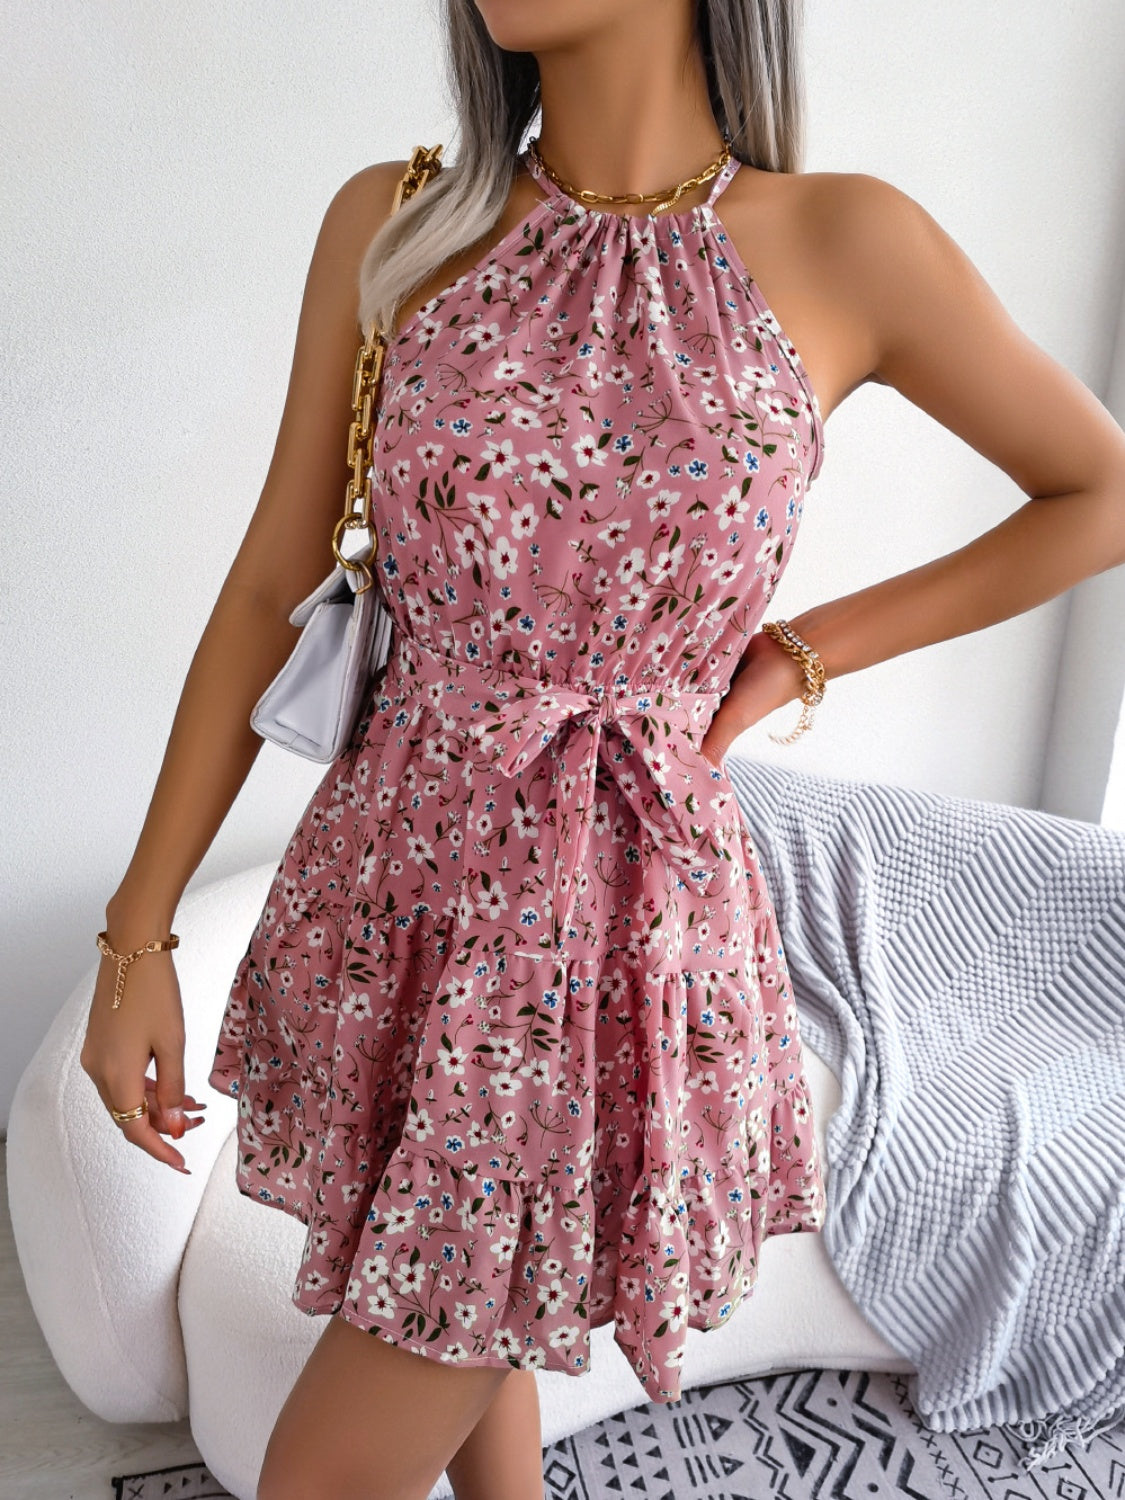 Tied Printed Grecian Neck Mini Dress - Crazy Like a Daisy Boutique #